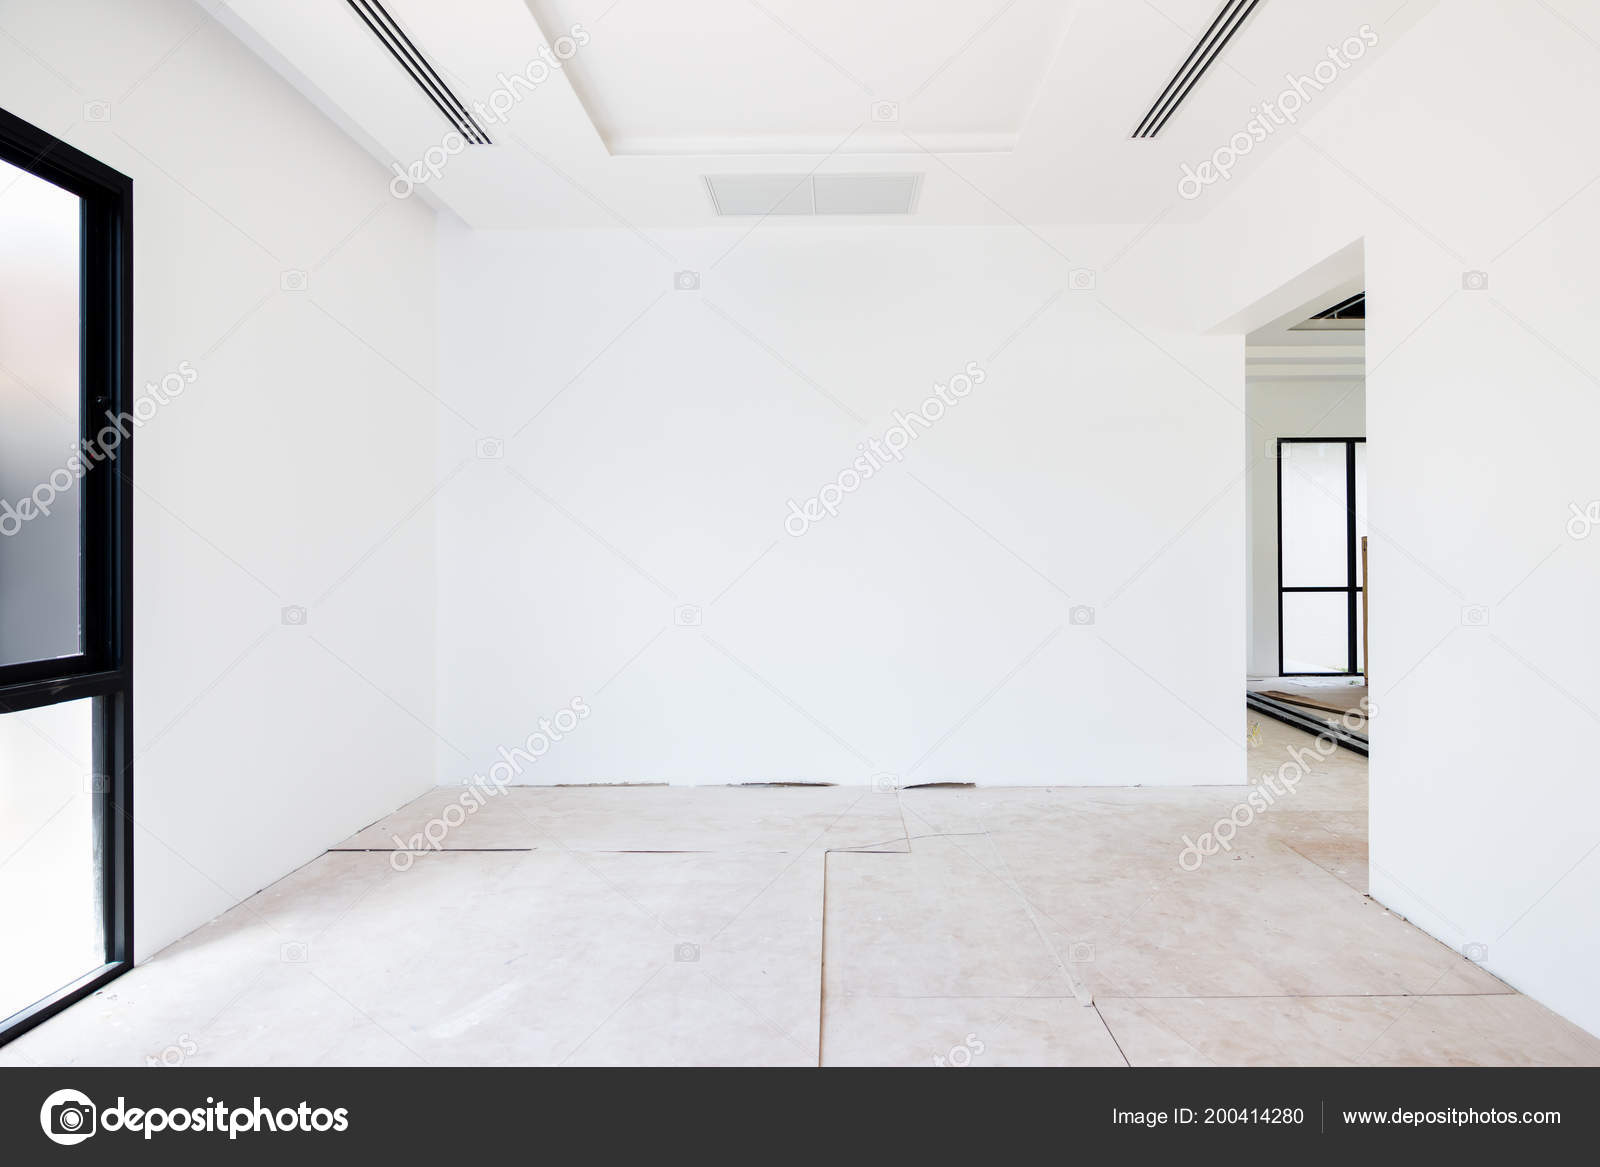 Empty Room Interior Build Wall Gypsum Board White Colur Air